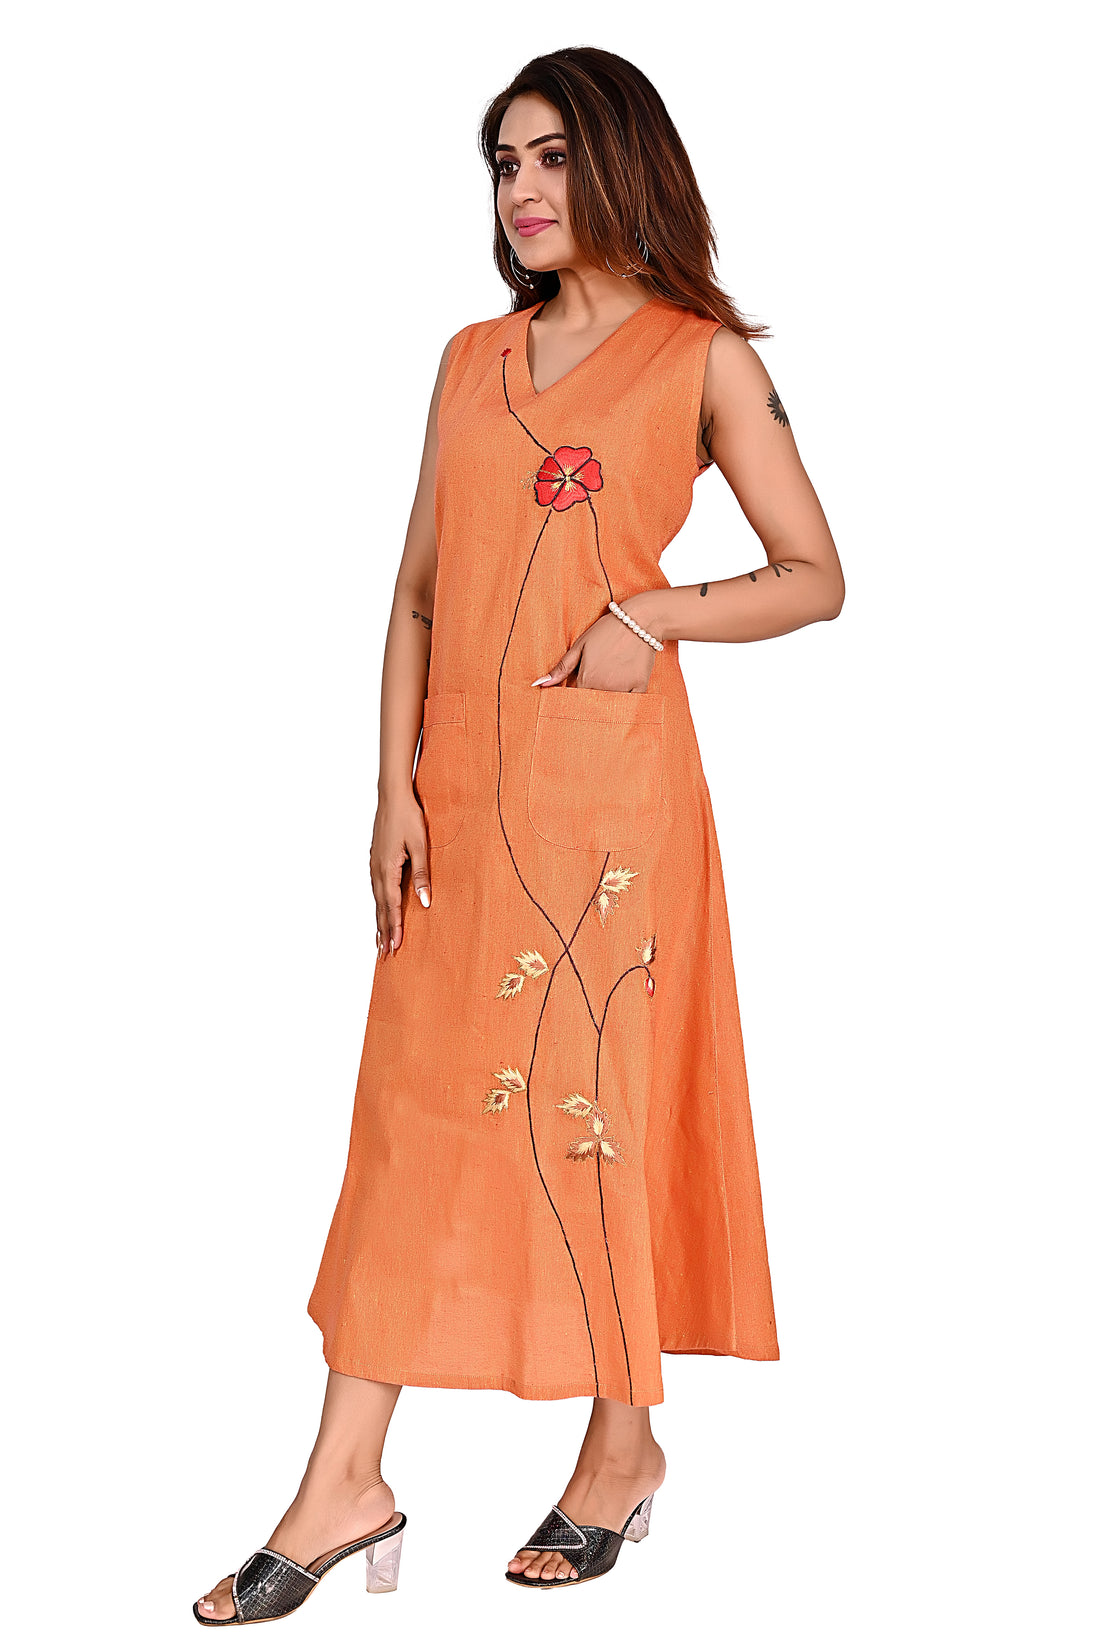 Nirmal online Premium cotton tunic Dress for Women in  Orange colour